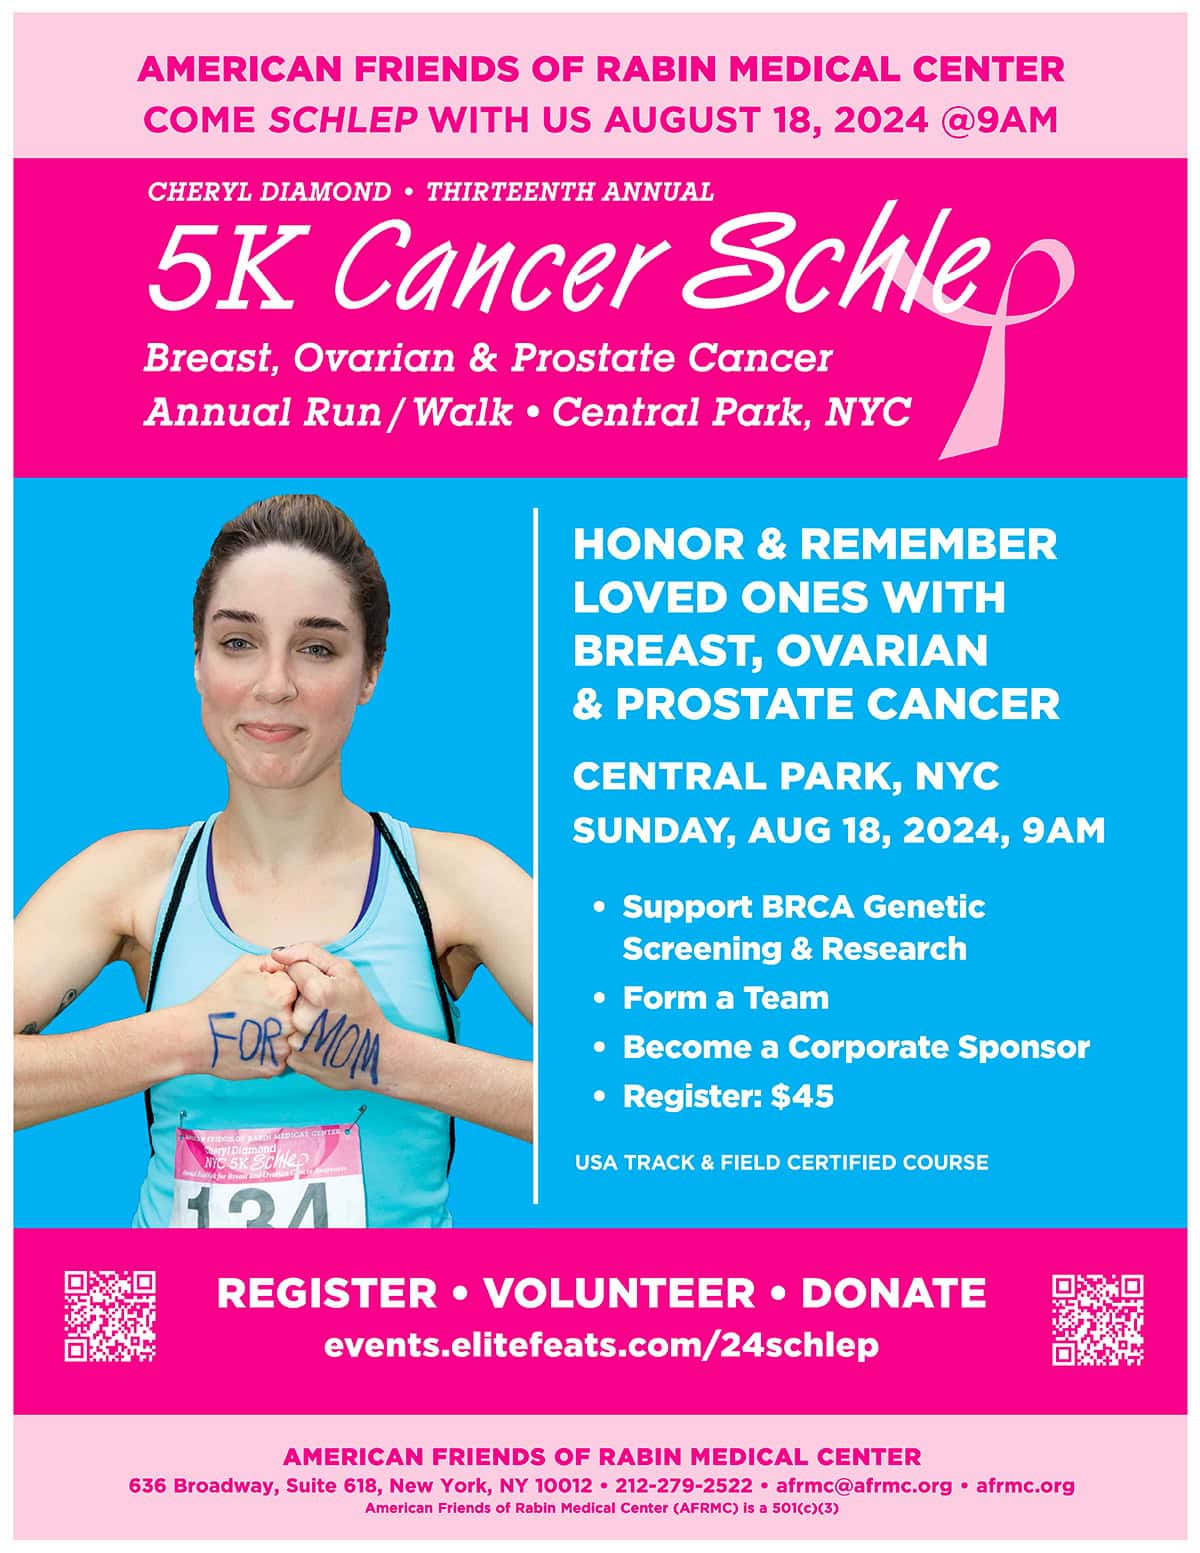 The 2024 NYC Cheryl Diamond 5k Cancer SCHLEP